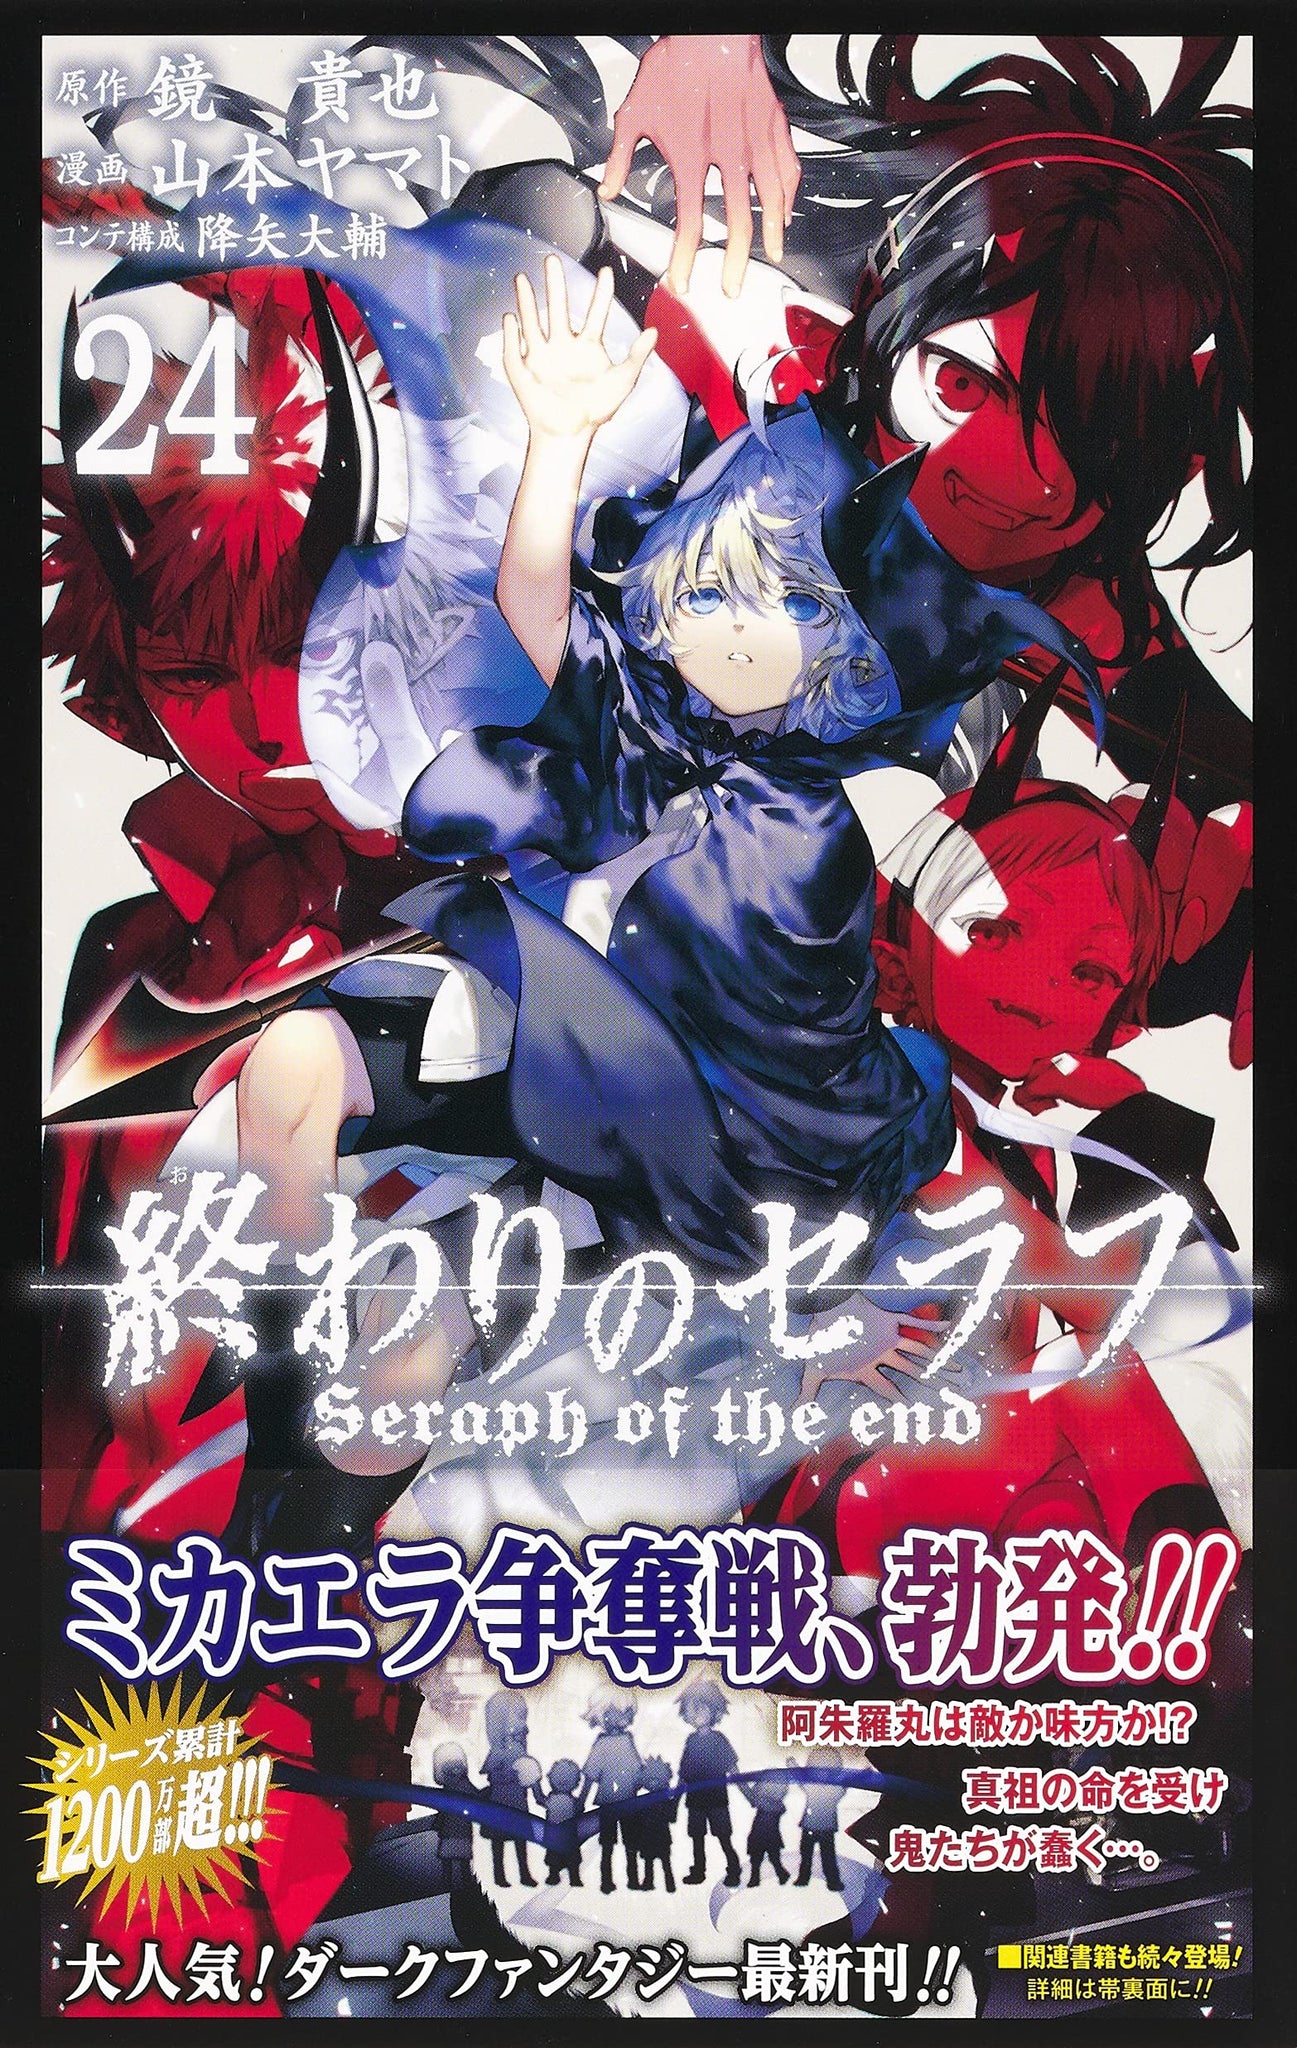 Seraph of the end - Vol 29 (Owari no Seraph)